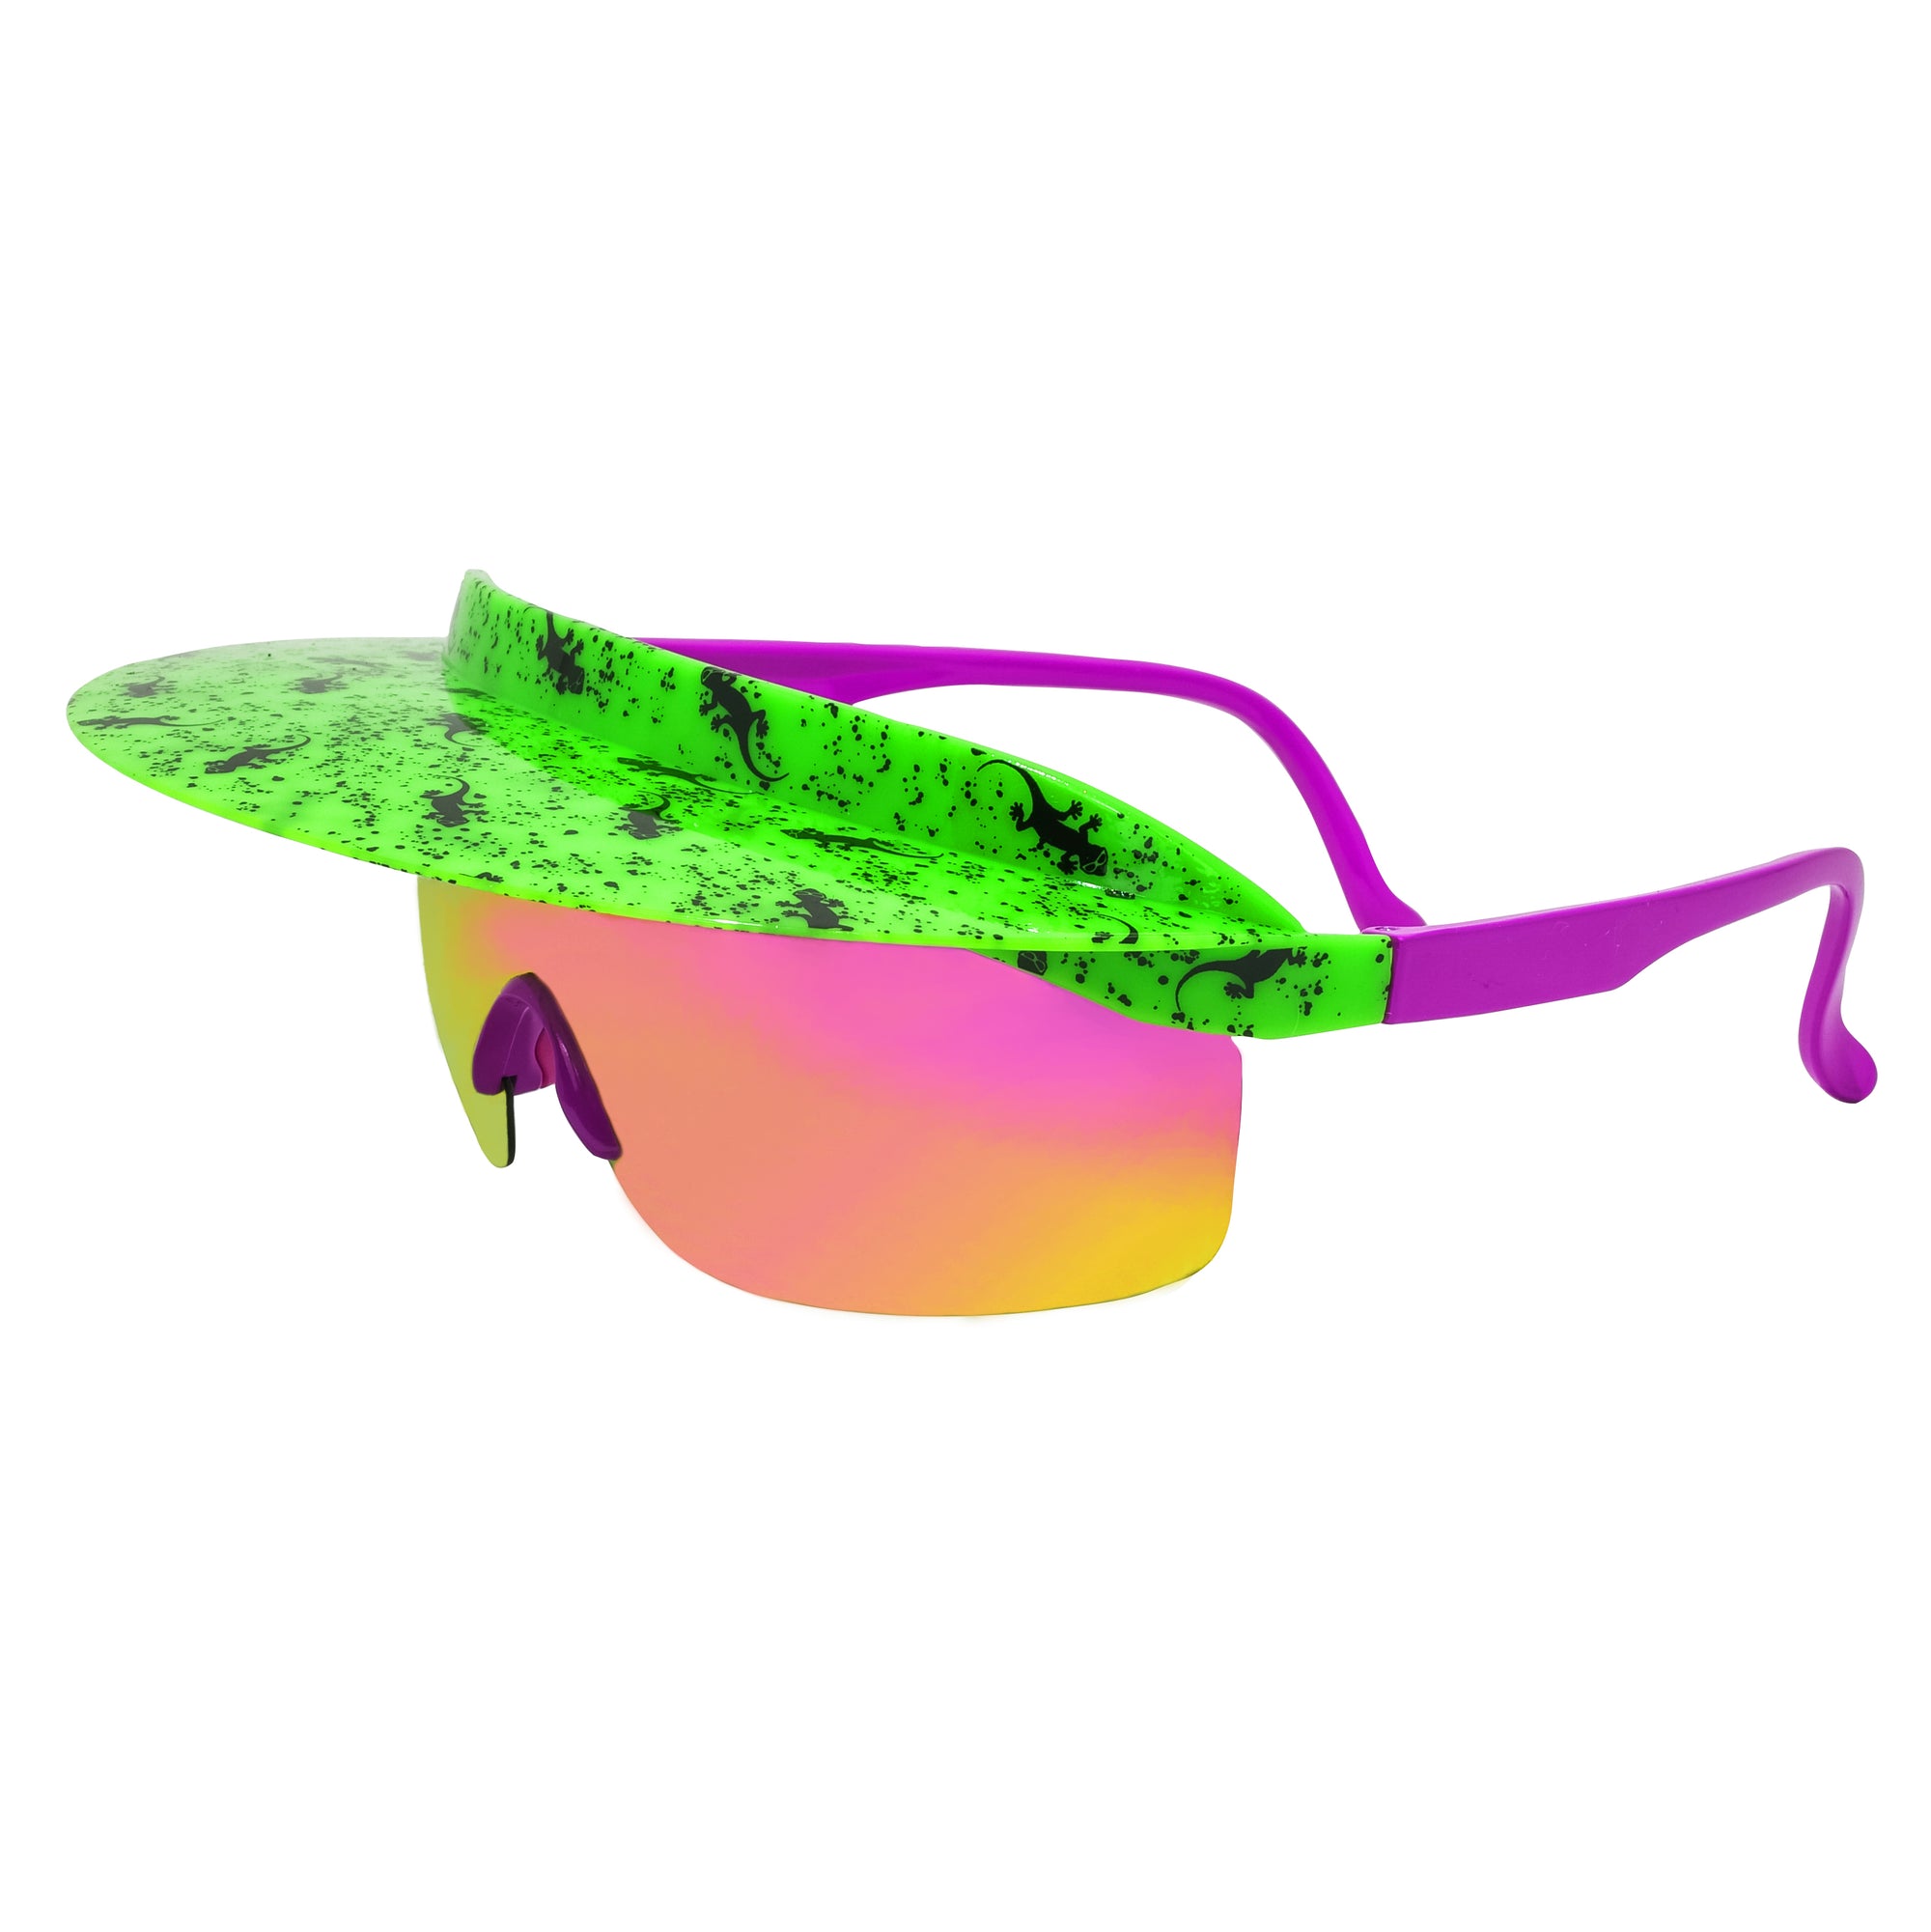 Retro Gecko Hawaii Visor Shades Sunglasses. Nostalgic green pink gecko clothing inspired UV400 Polarized visor sunglasses. B Fresh Gear